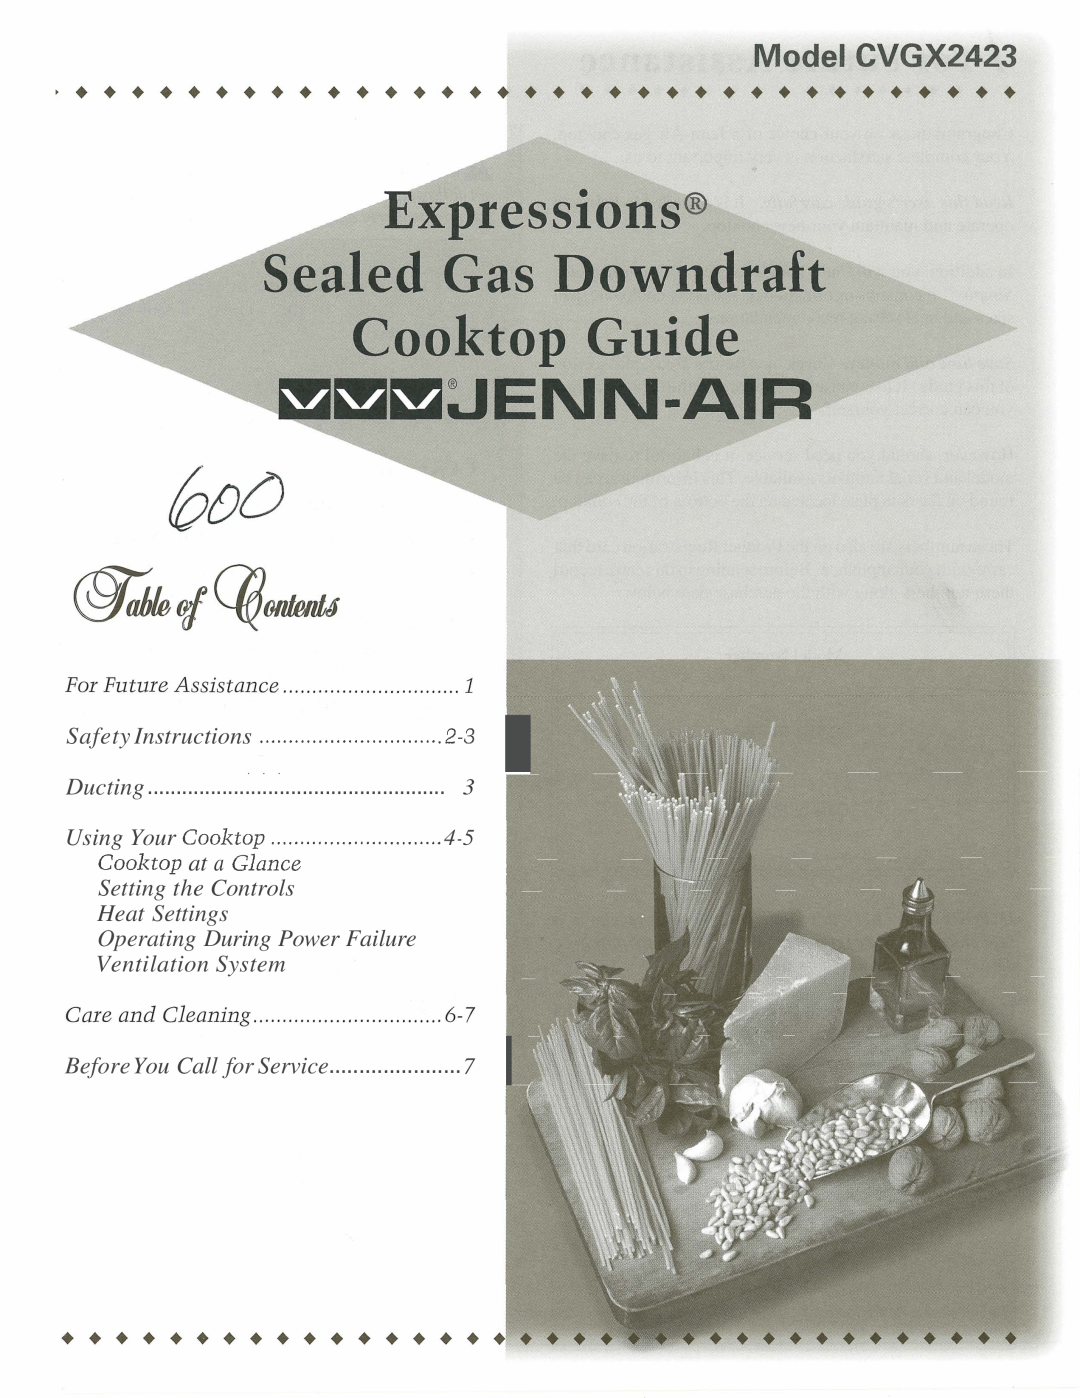 Jenn-Air manual Model CVGX2423, 444444444444444444444444444444444444, Expressions@ Sealed Gas Downdraft Cooktop Guide 